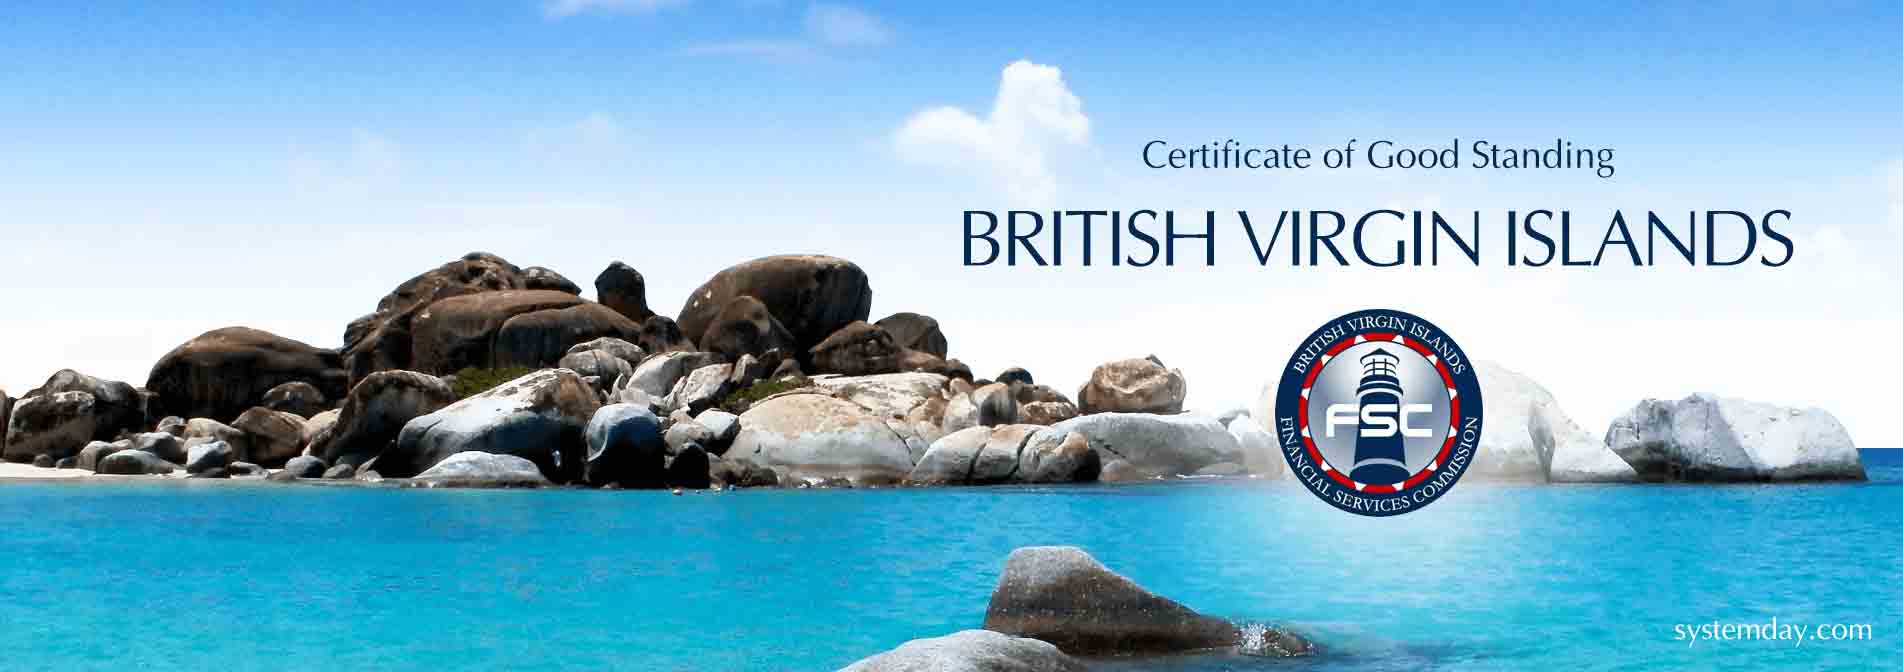 BVI Certificate of Good Standing